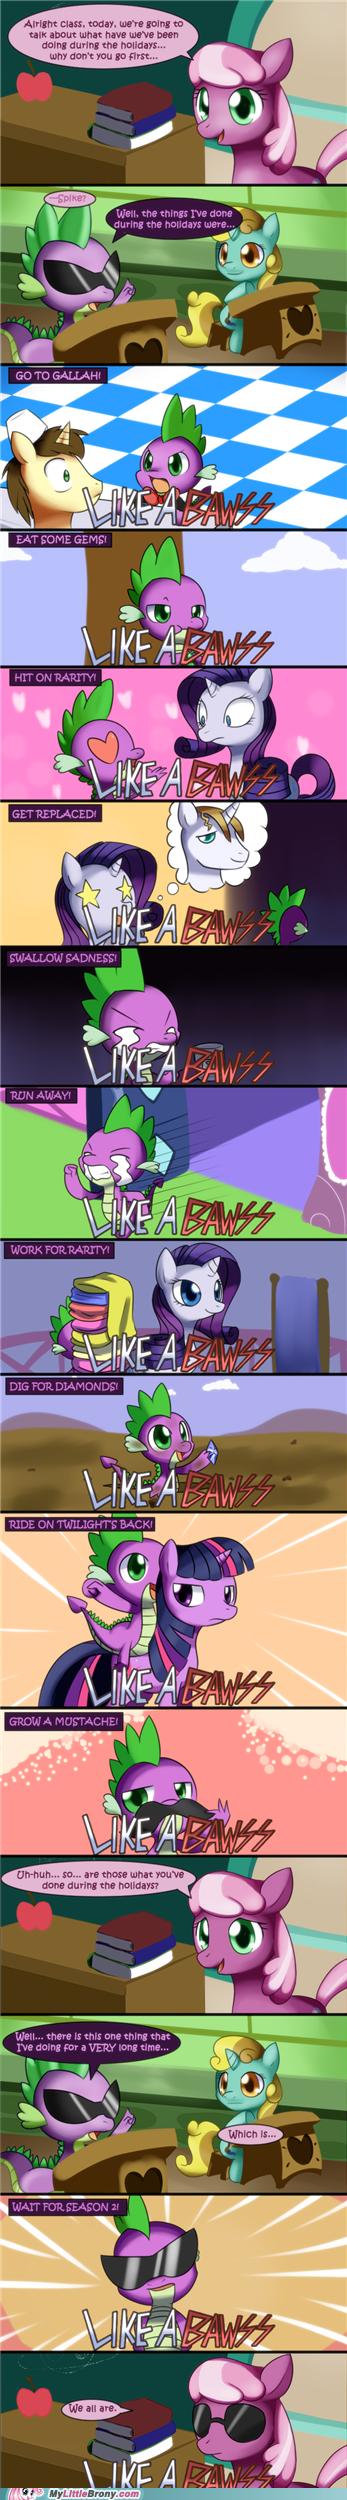 Spike: LIKE A BAWSS - My Little Brony - my little pony, friendship is